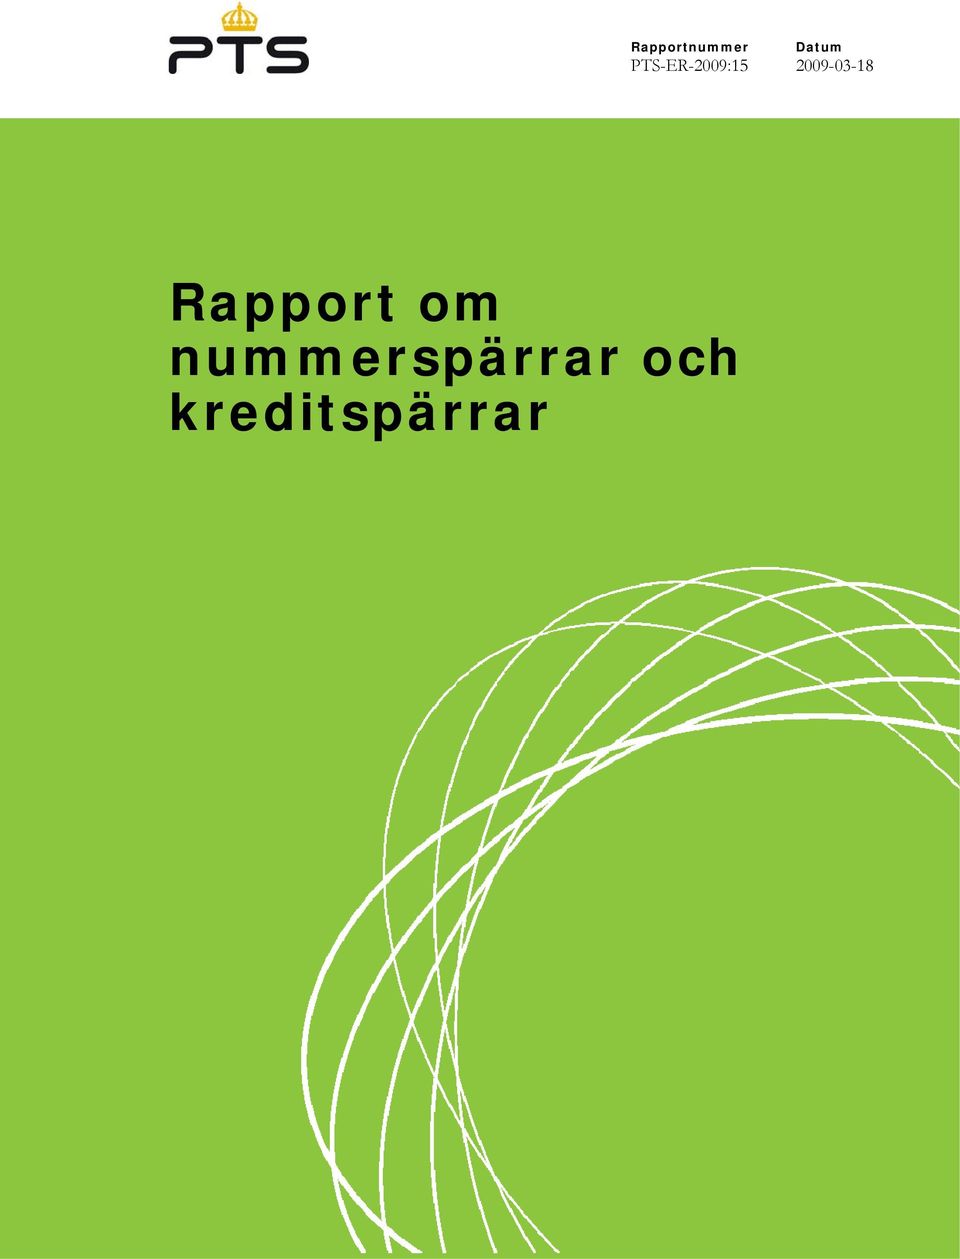 2009-03-18 Rapport om